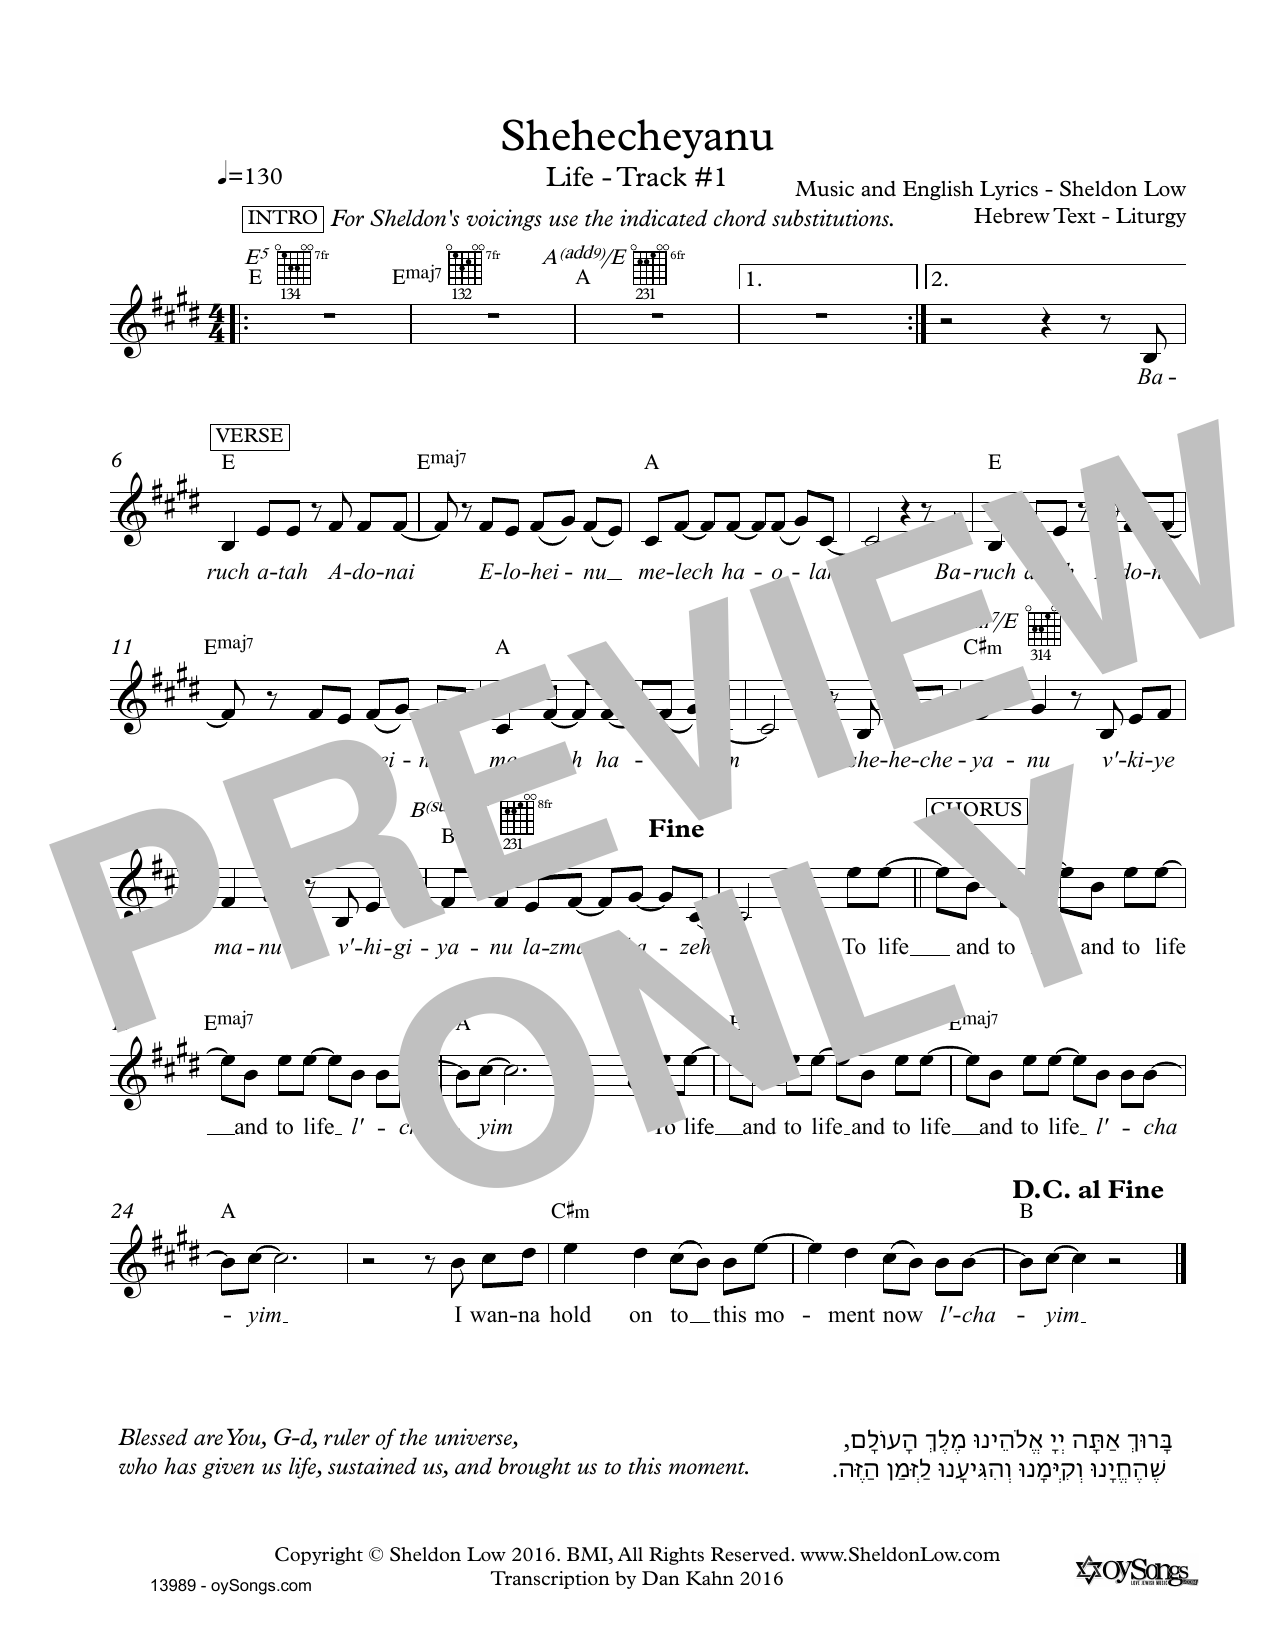 Sheldon Low Shehecheyanu sheet music notes and chords arranged for Lead Sheet / Fake Book